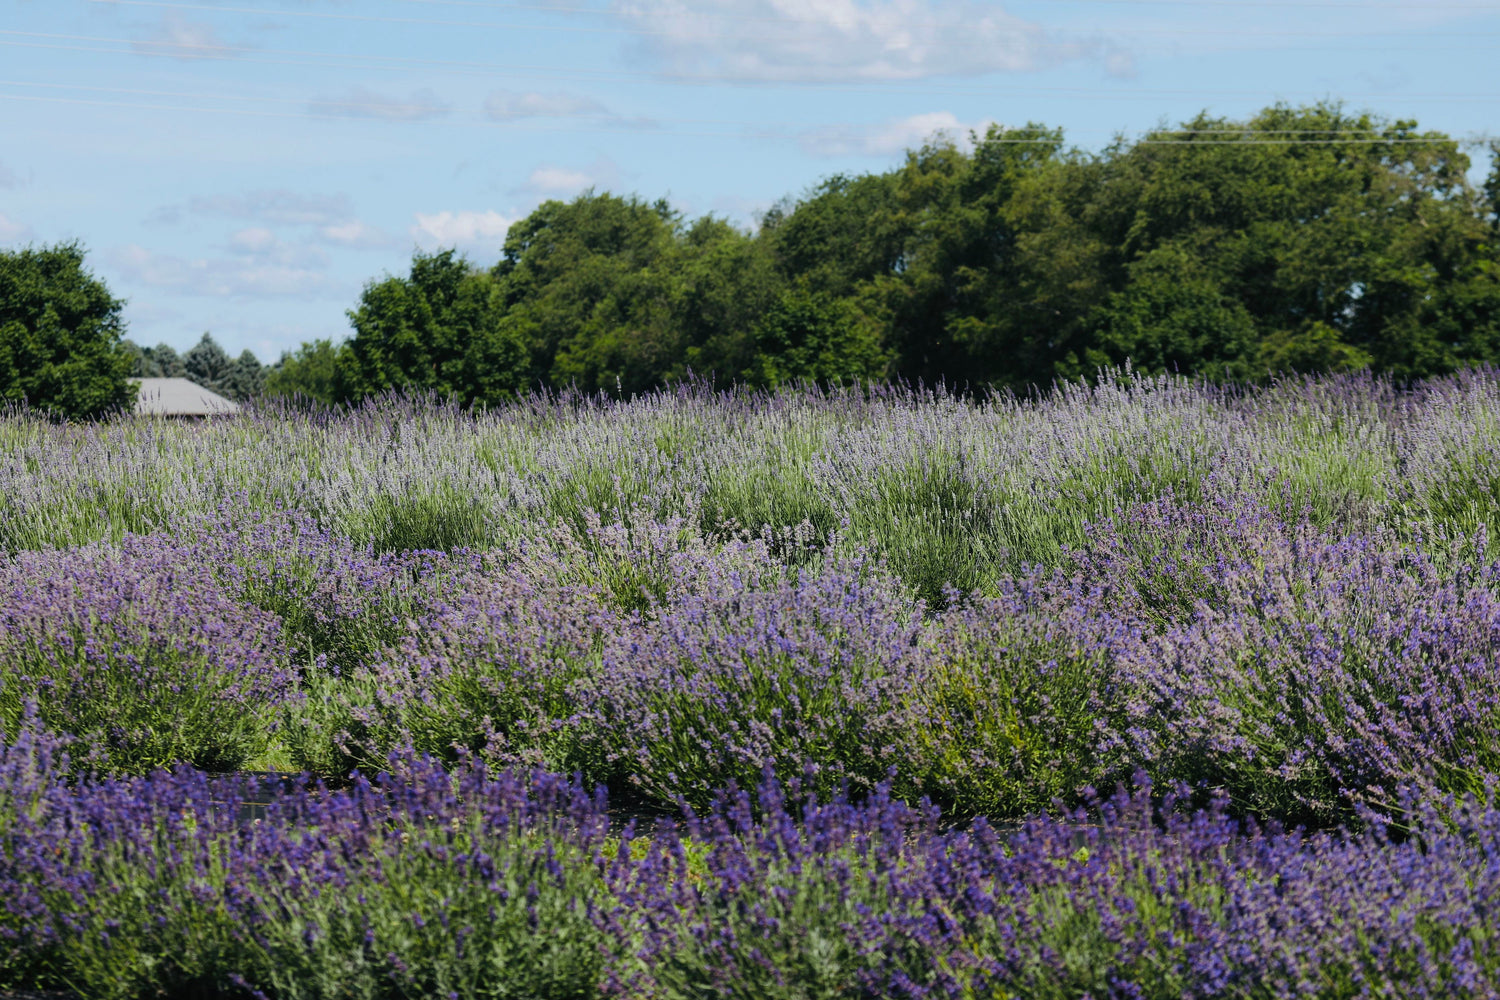 Lavender Essential Oil – Araceli Farms